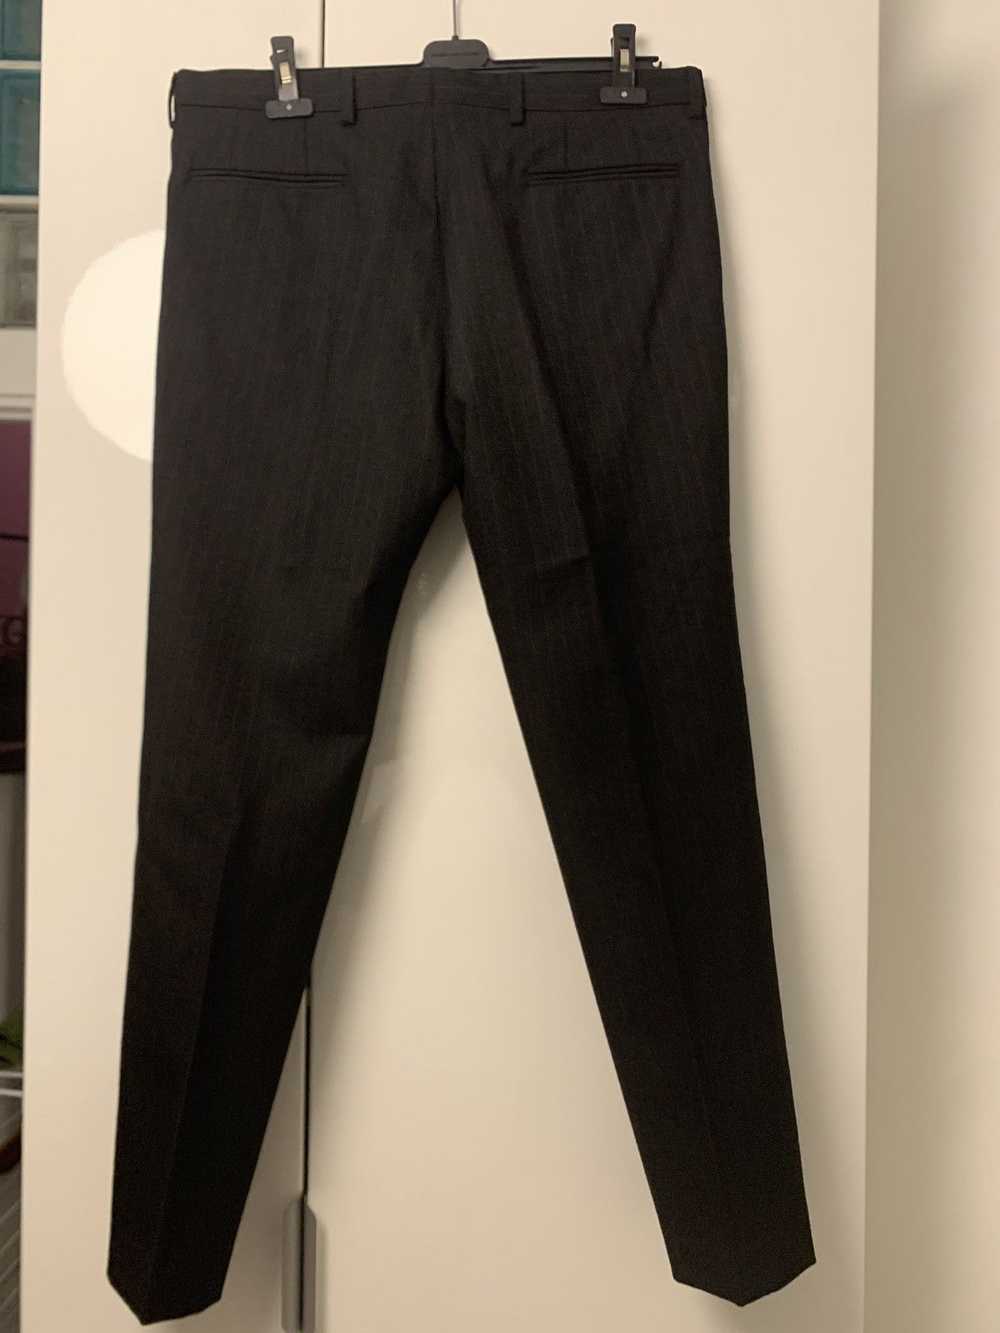 Dries Van Noten Striped tailored pants - image 5